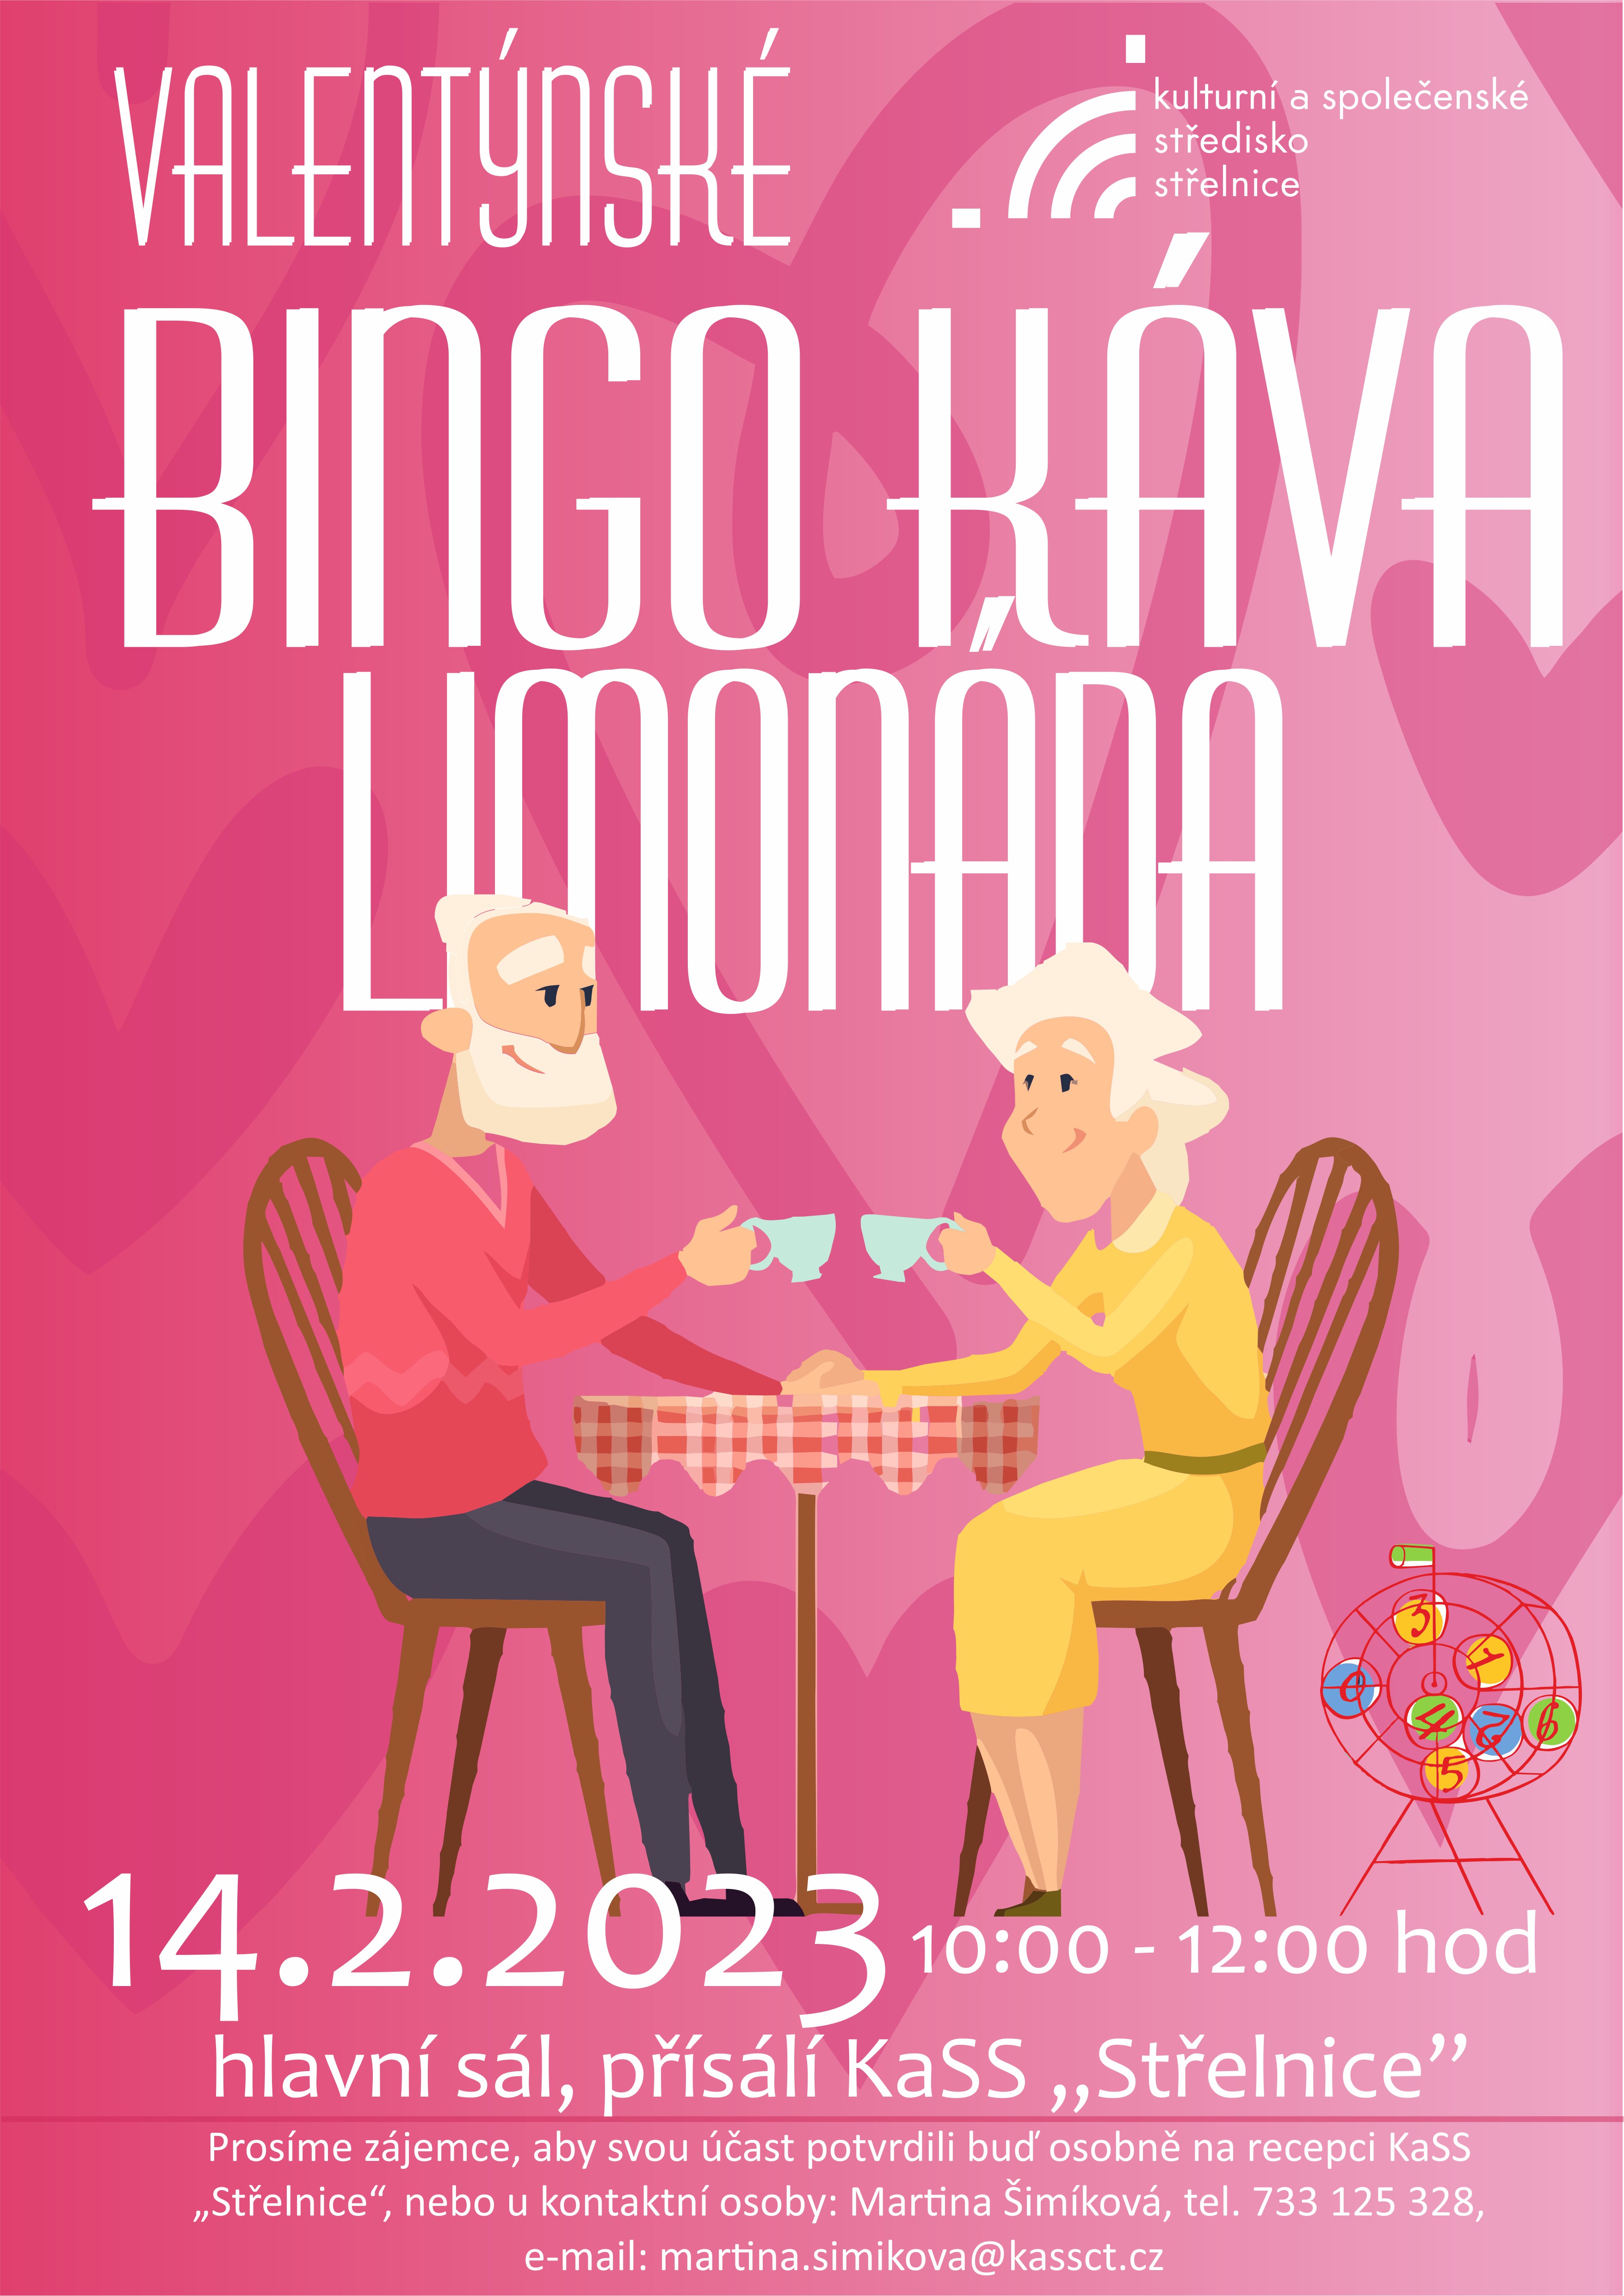 valentynske-bingo-kava-limonada